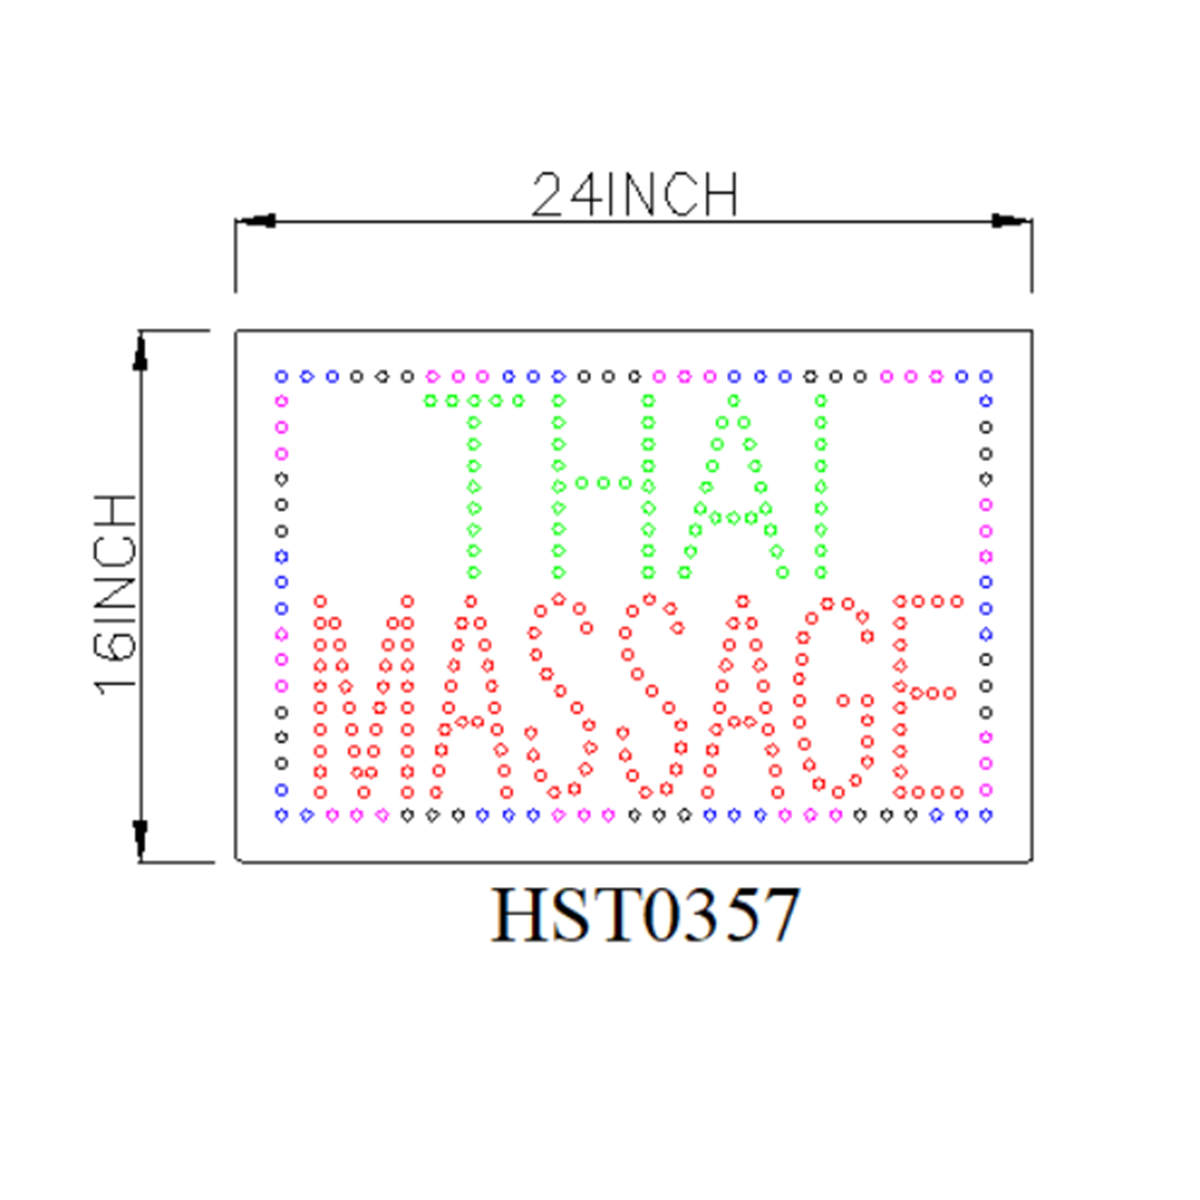 Thai massage led sign